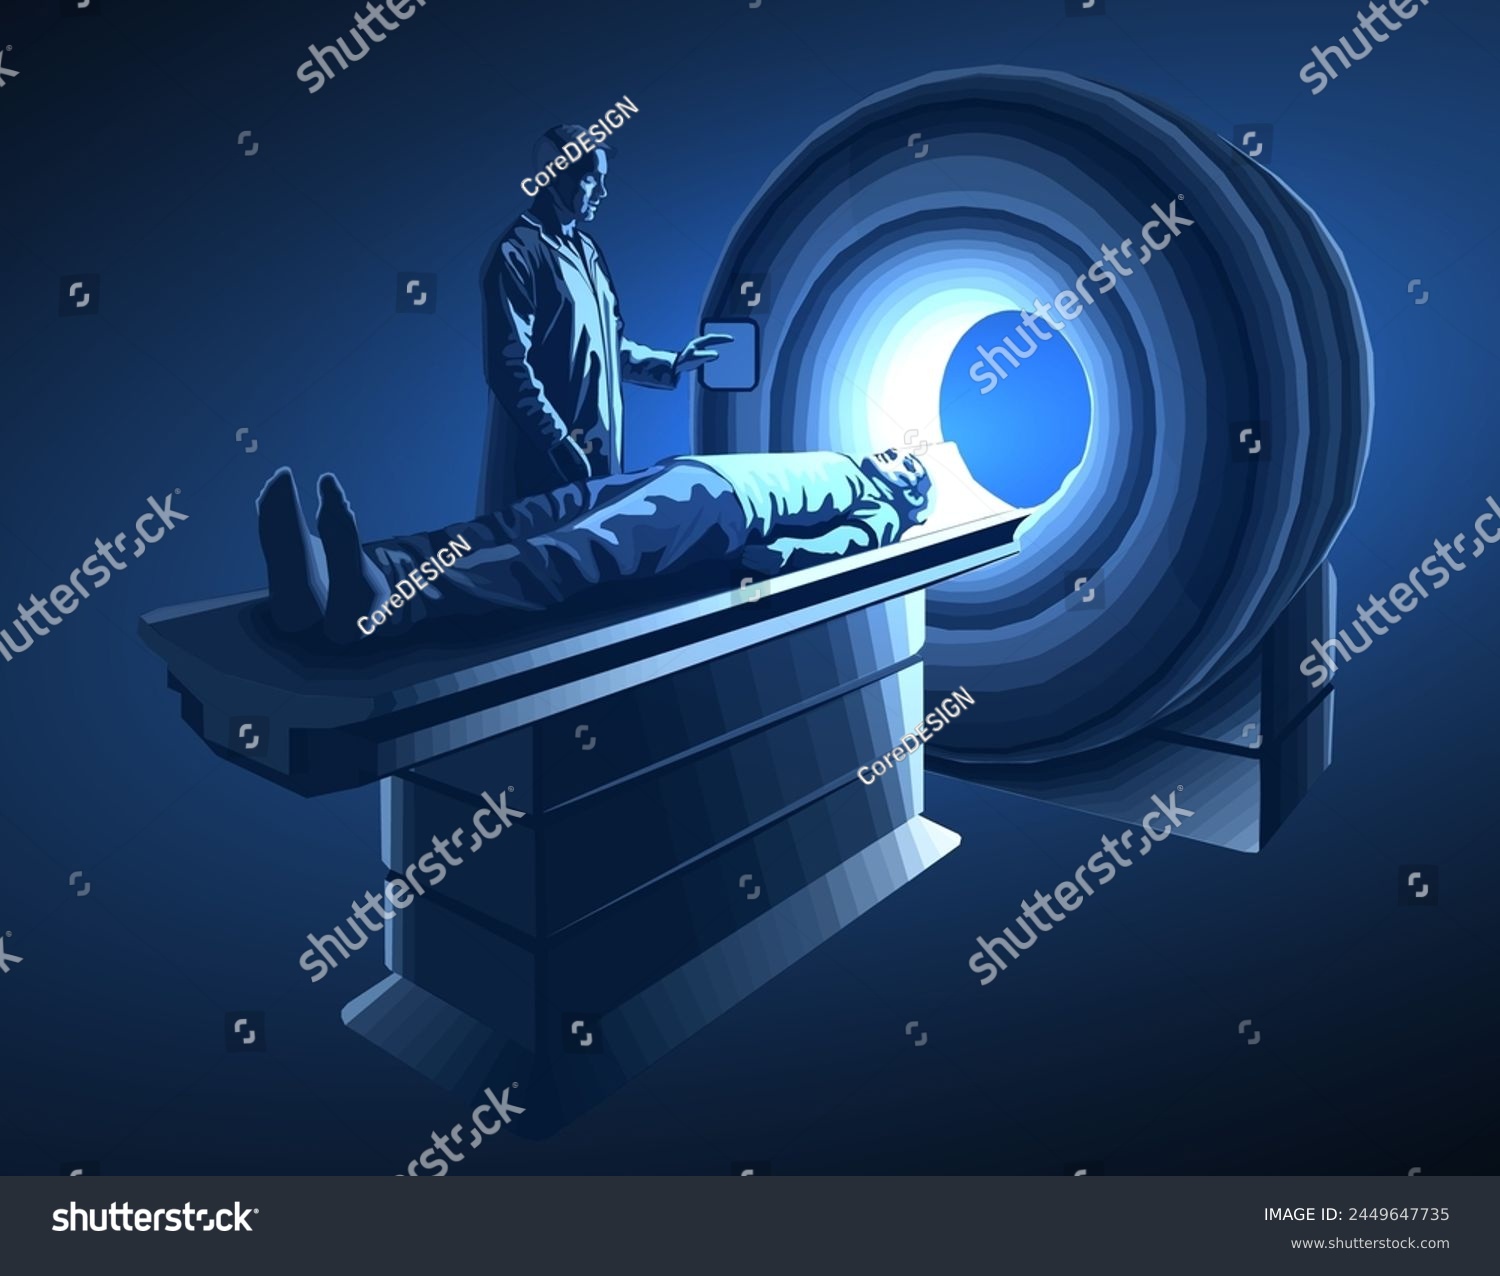 SVG of MRI machine. Head CT, Brain imaging, Diagnostic radiology, Medical scanner, Digital care, Magnetic resonance, MRI scan, Computer tomography, Cancer test, Hospital equipment, Lab technology concept svg